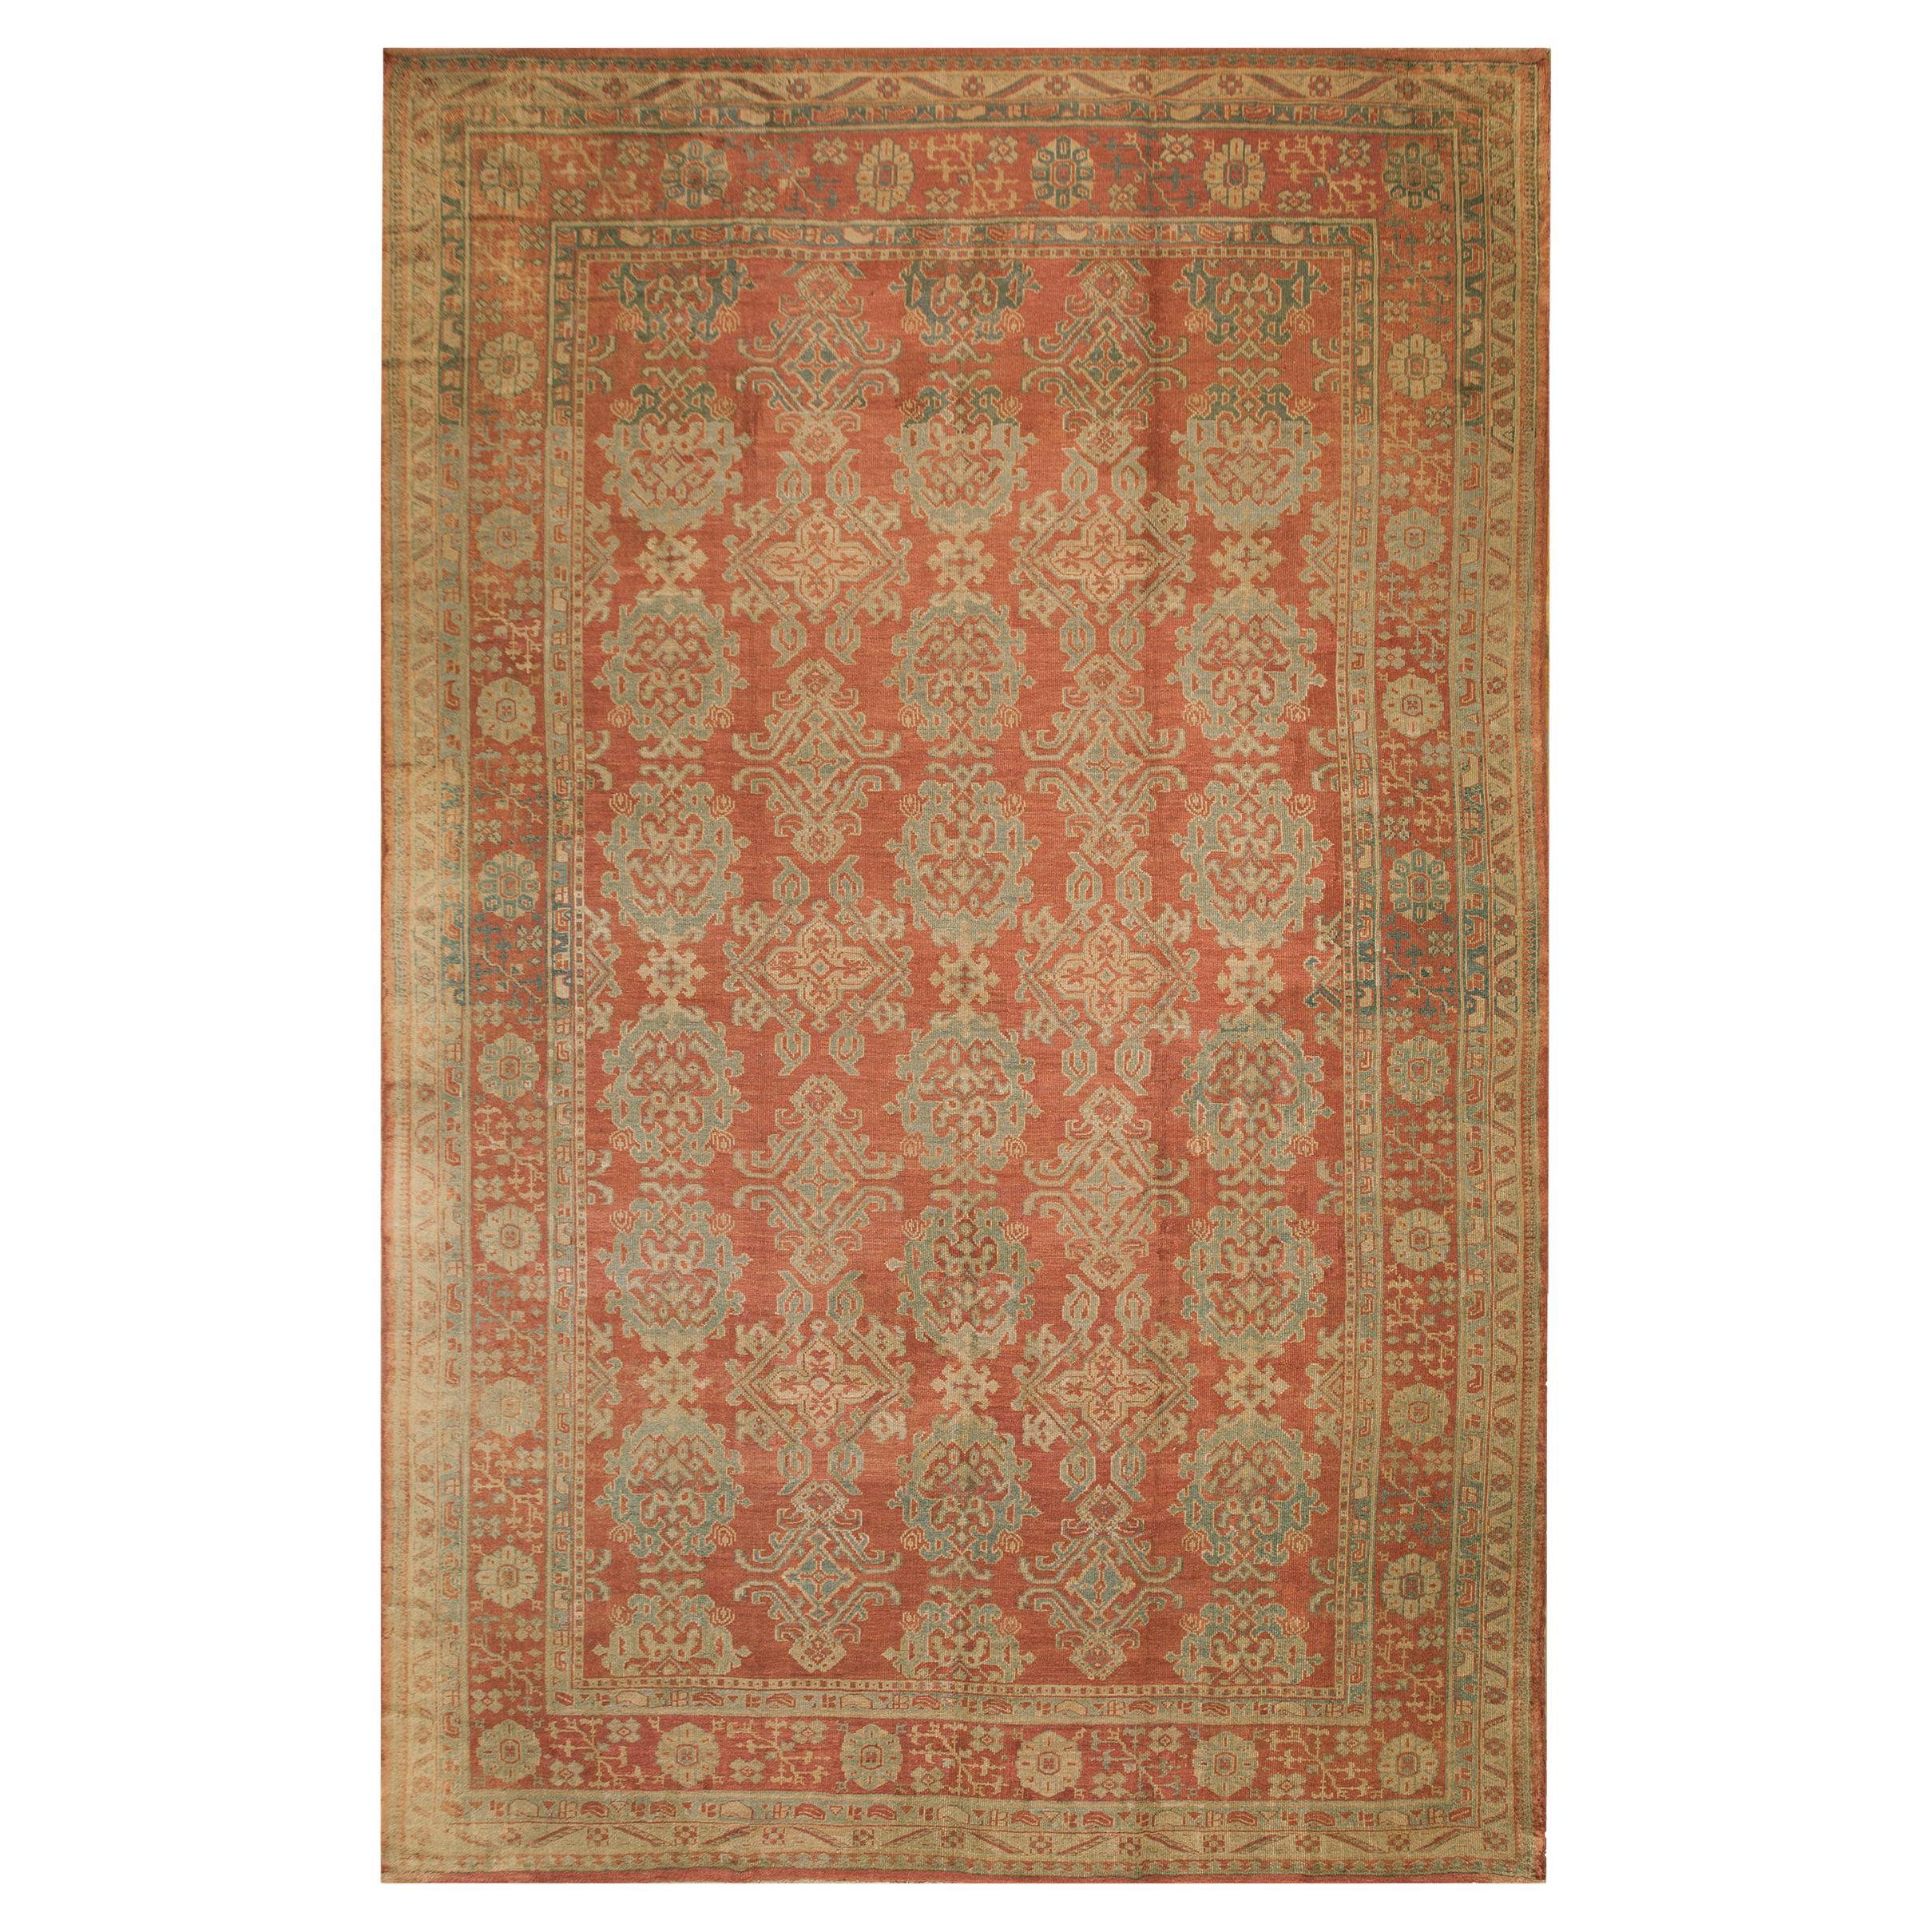 Late 19th Century Turkish Oushak Smyrna Carpet ( 12'6" x 19' - 380 x 580 )